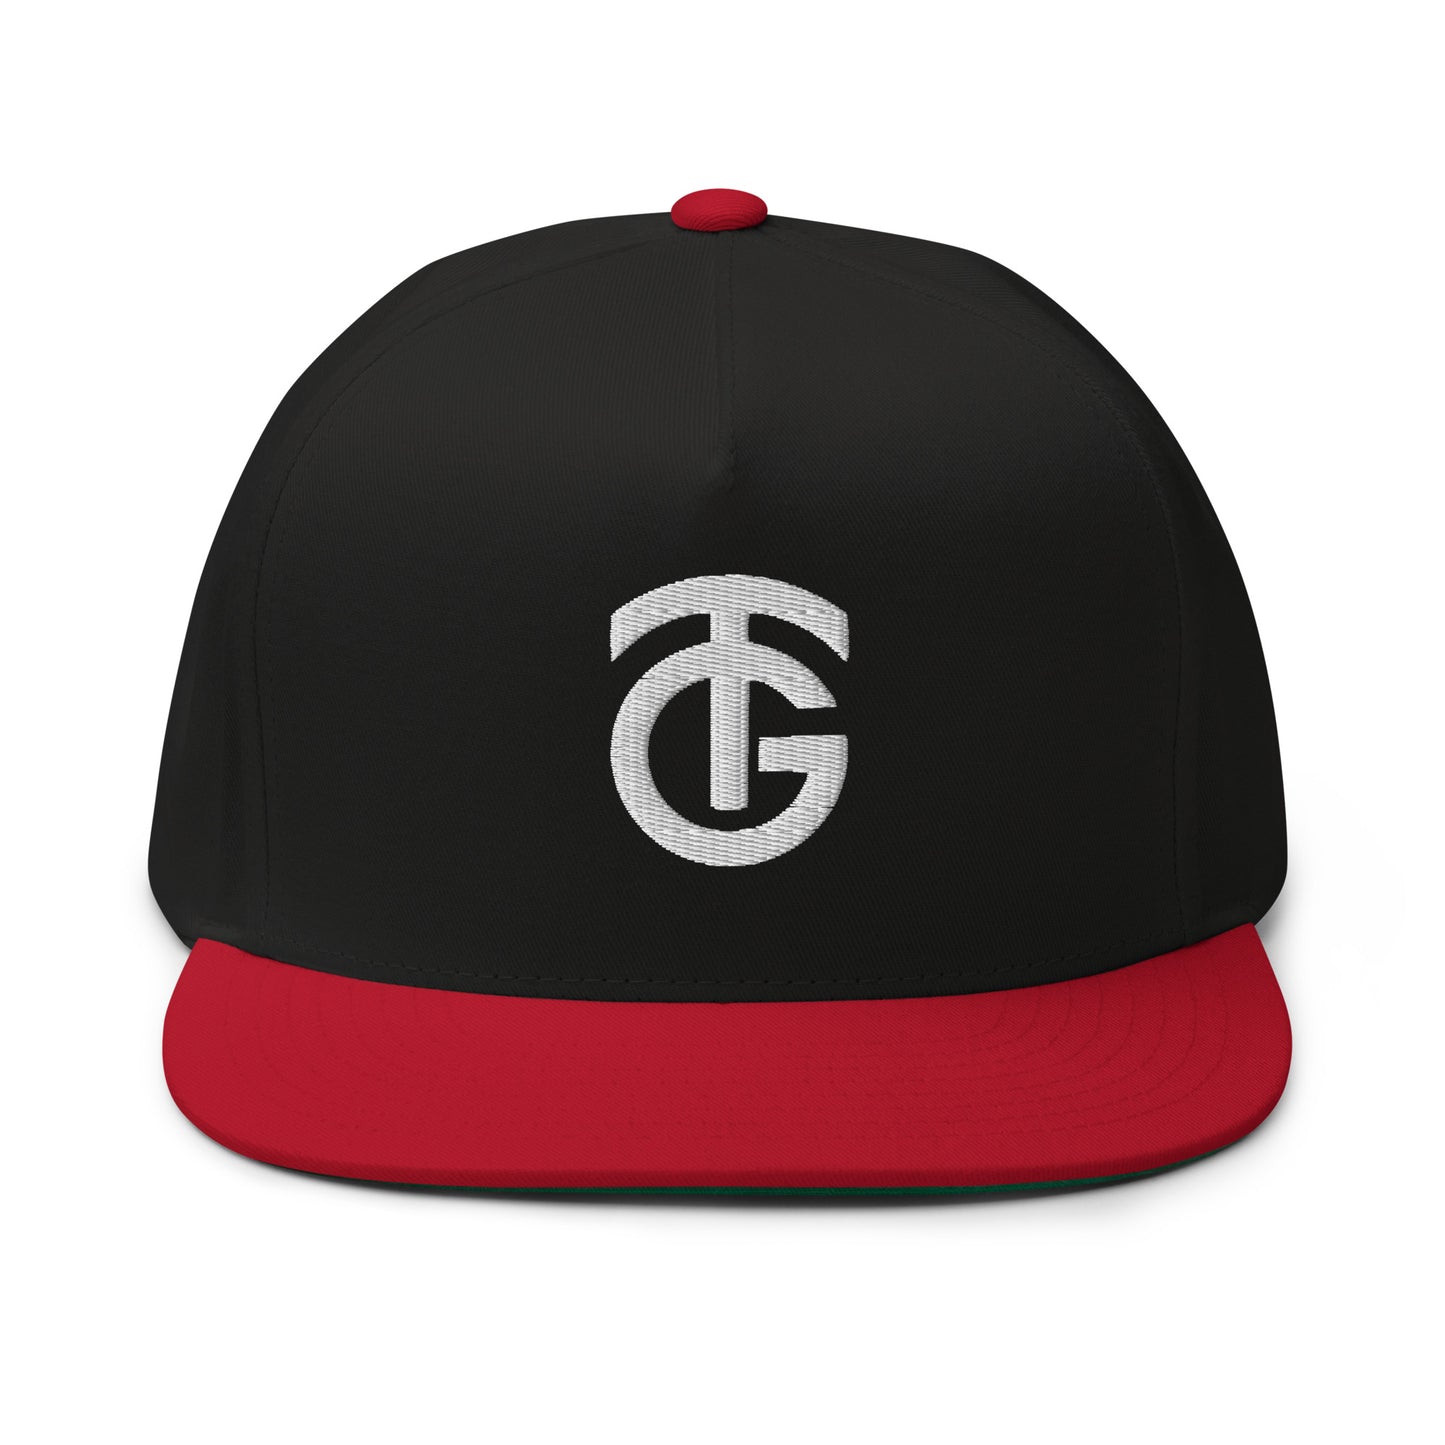 TG Logo Flat Bill Cap